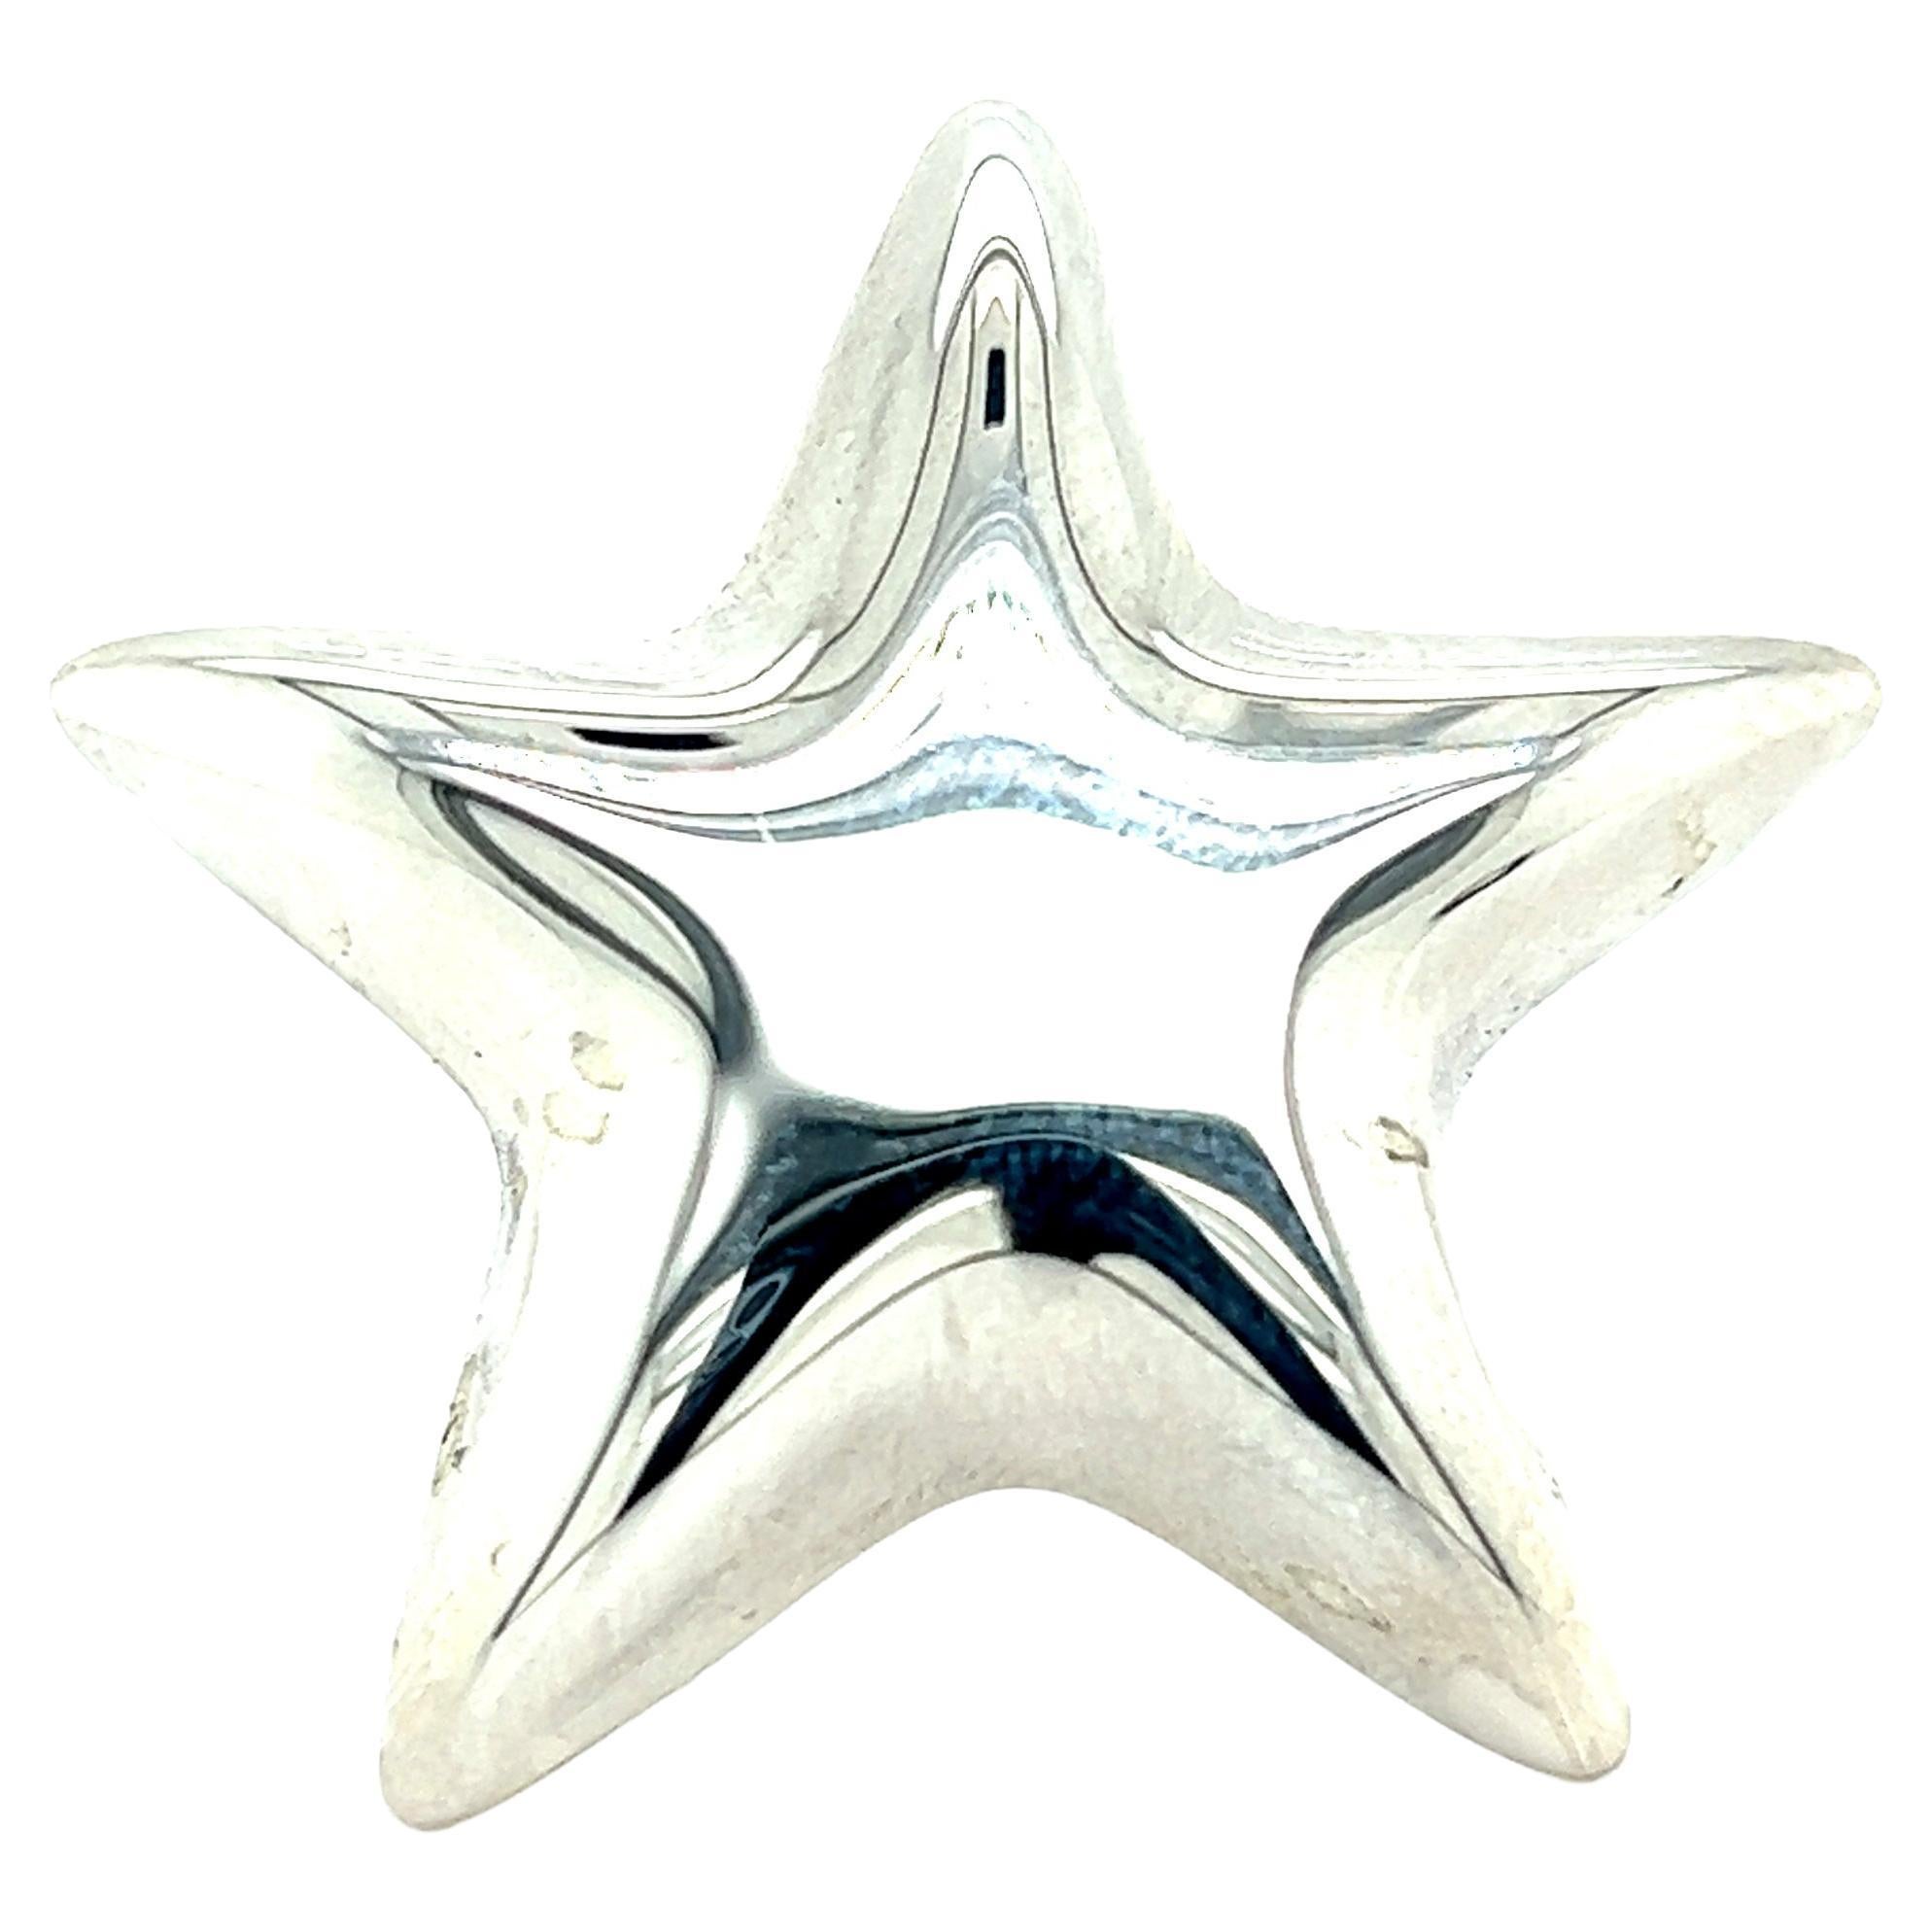 Tiffany & Co Estate Puffed Star Brooch Sterling Silver